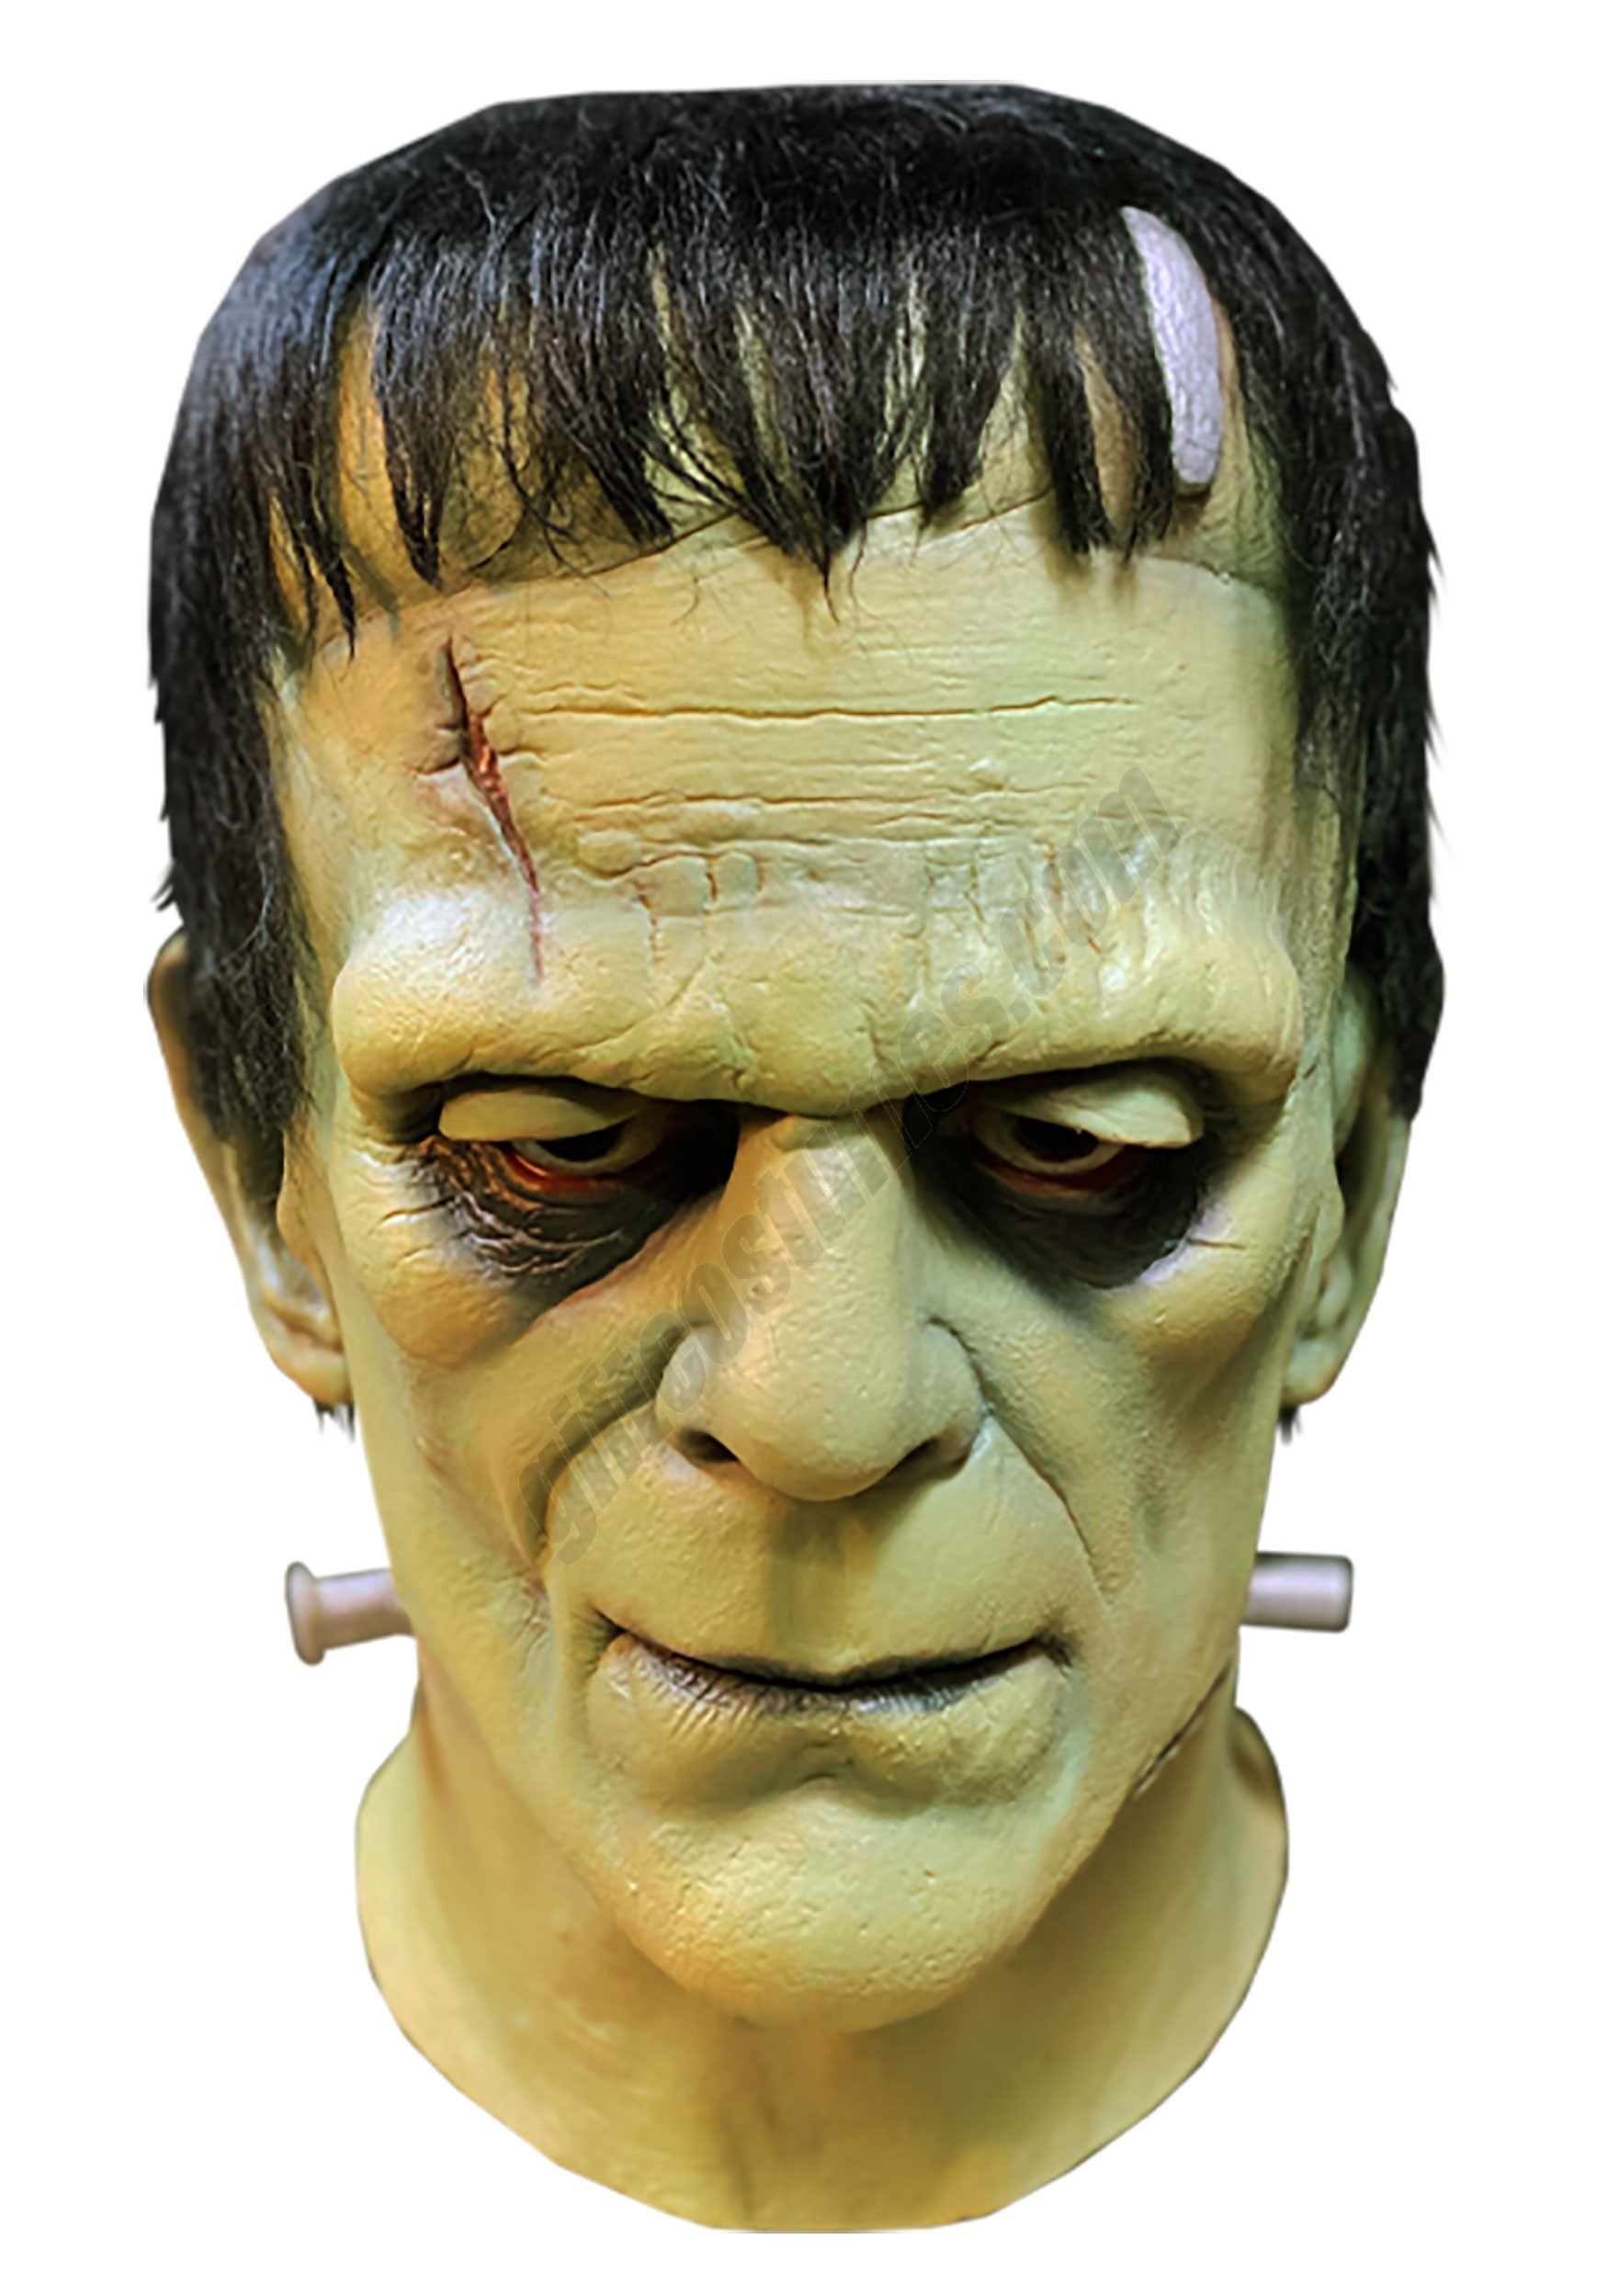 Universal Studios Frankenstein Mask Promotions - Universal Studios Frankenstein Mask Promotions